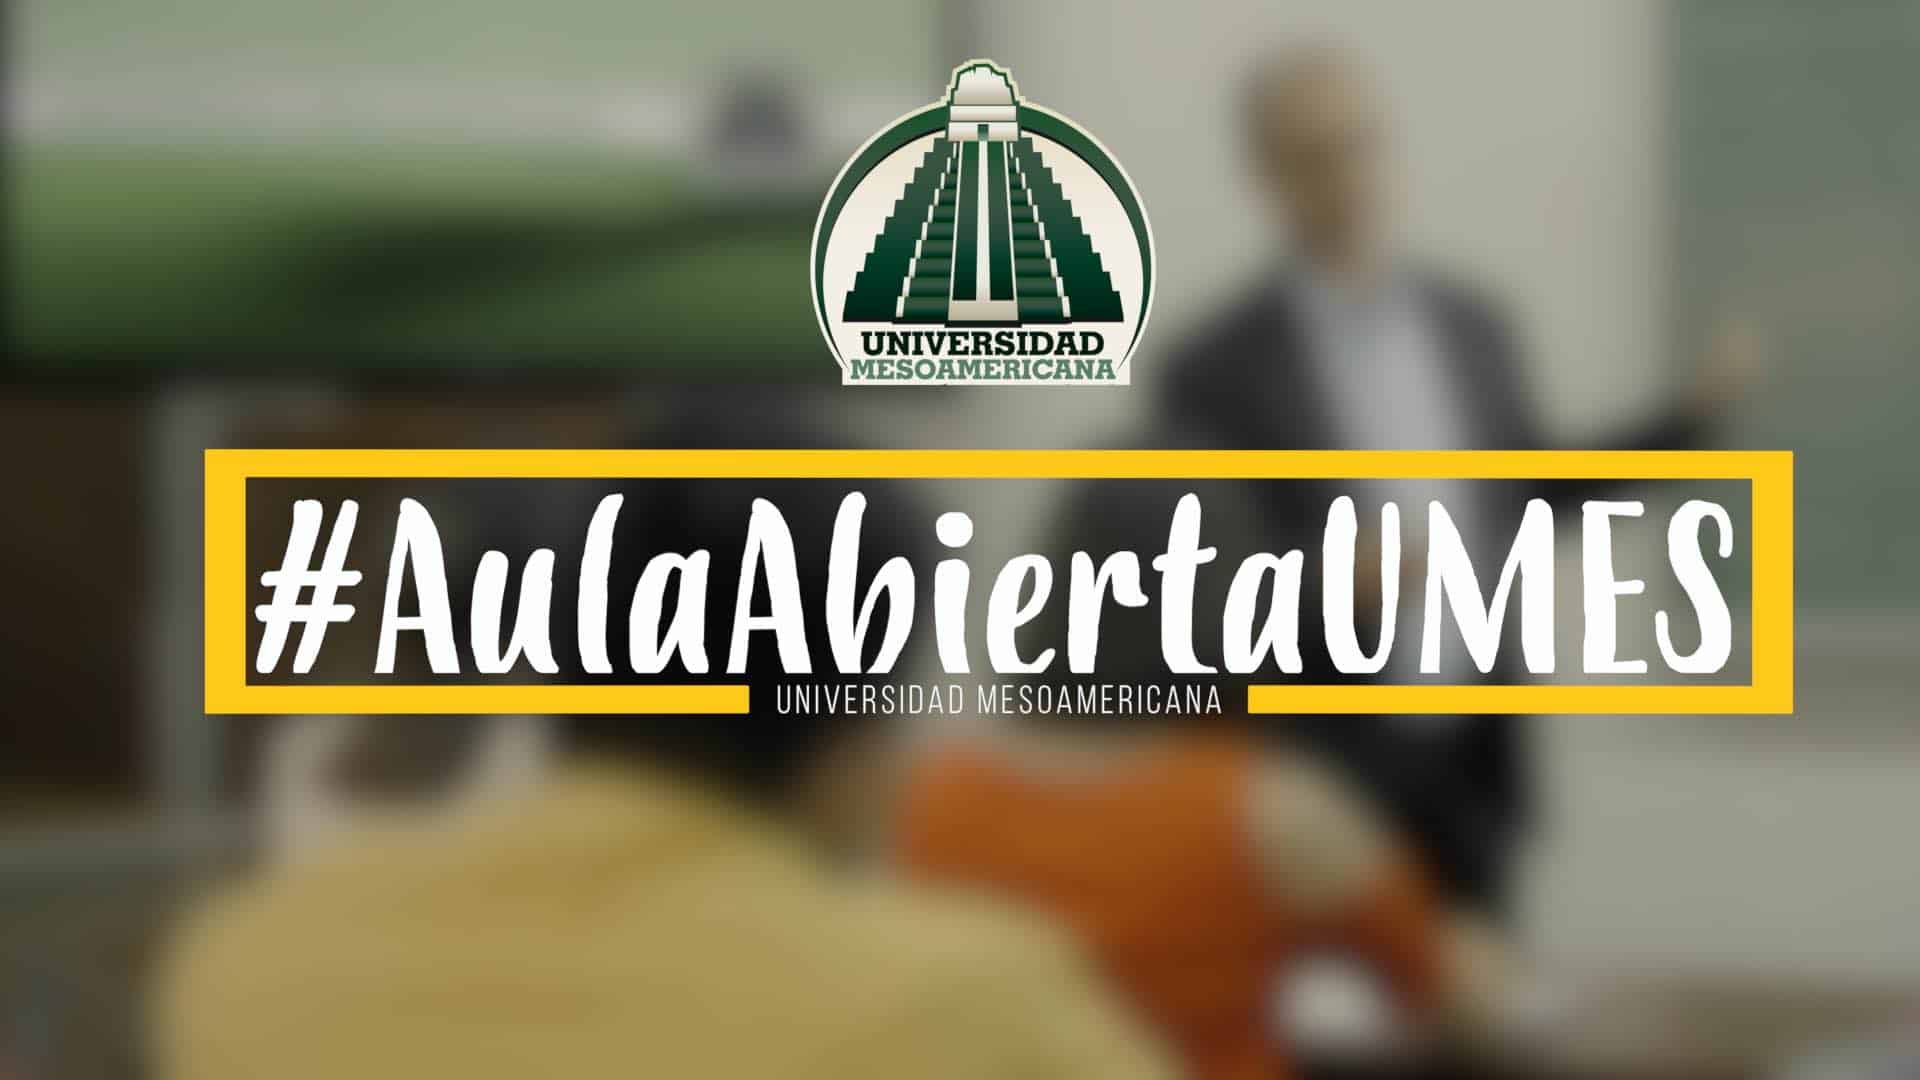 Programa #AulaAbiertaUMES, Universidad Mesoamericana de Guatemala.